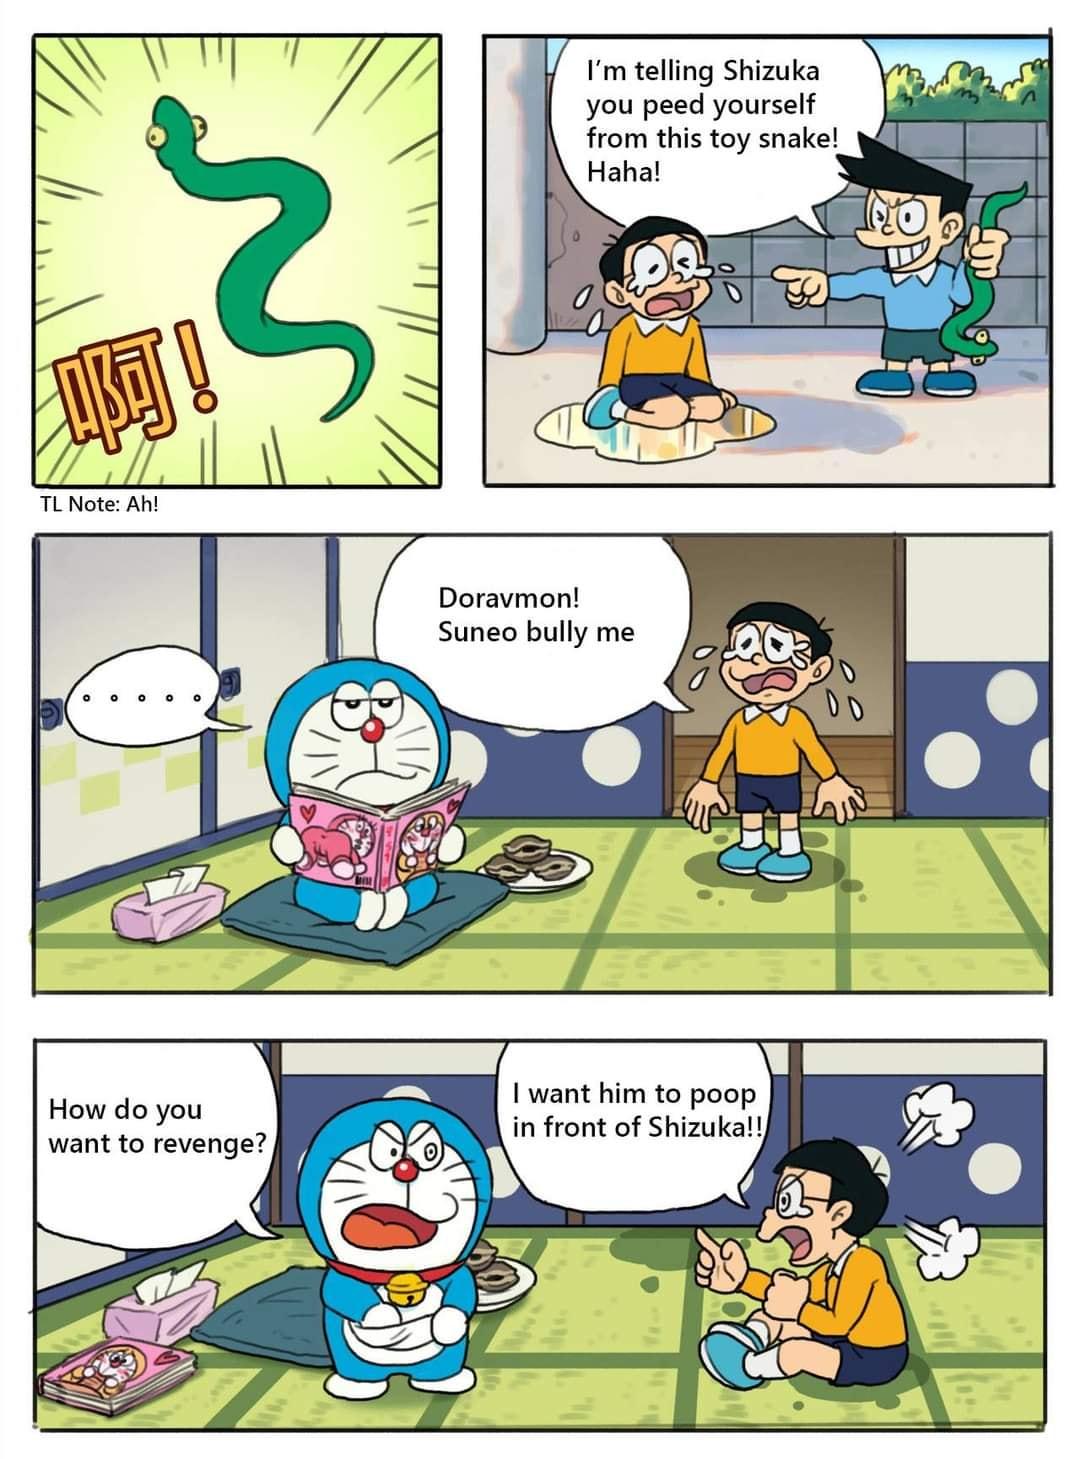 Free Blowjob DORAVMON - Doraemon Free Fucking - Page 2